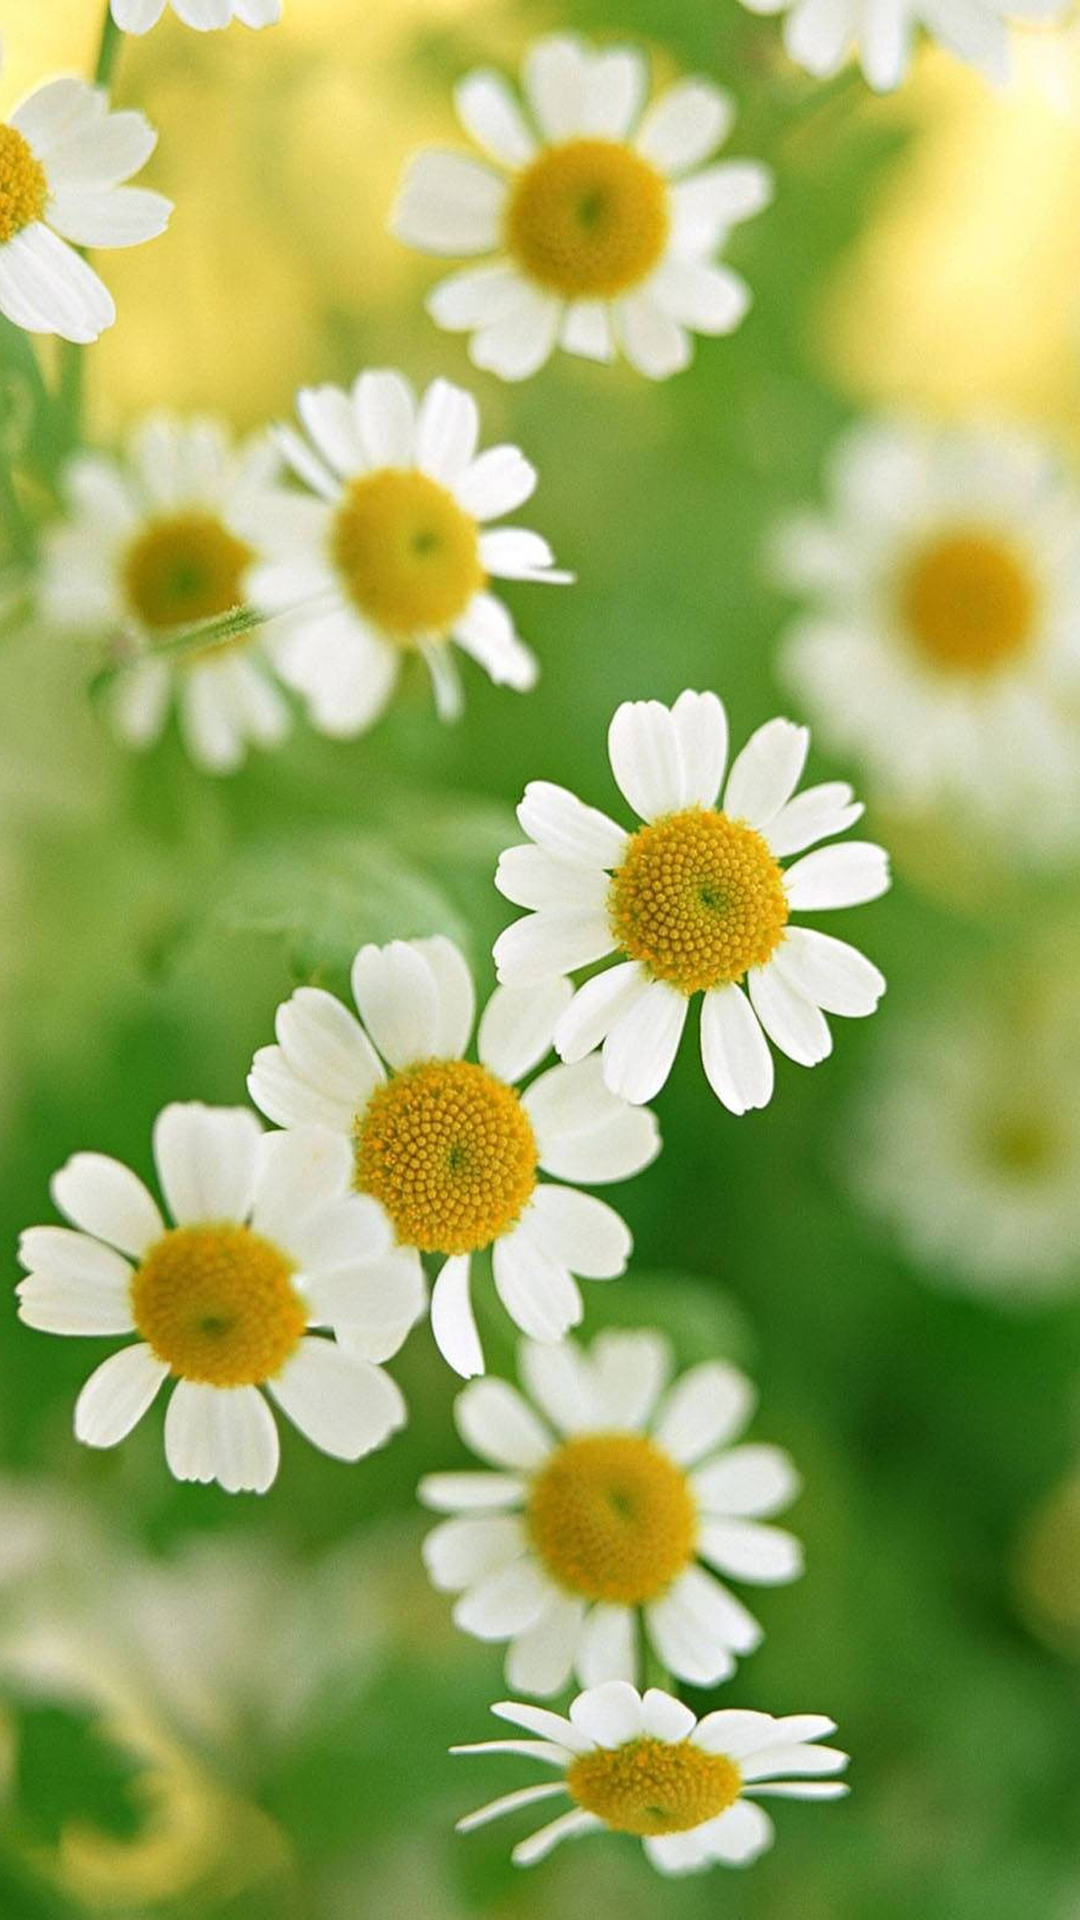 Nature White Daisy Flower iPhone Wallpaper Jpg